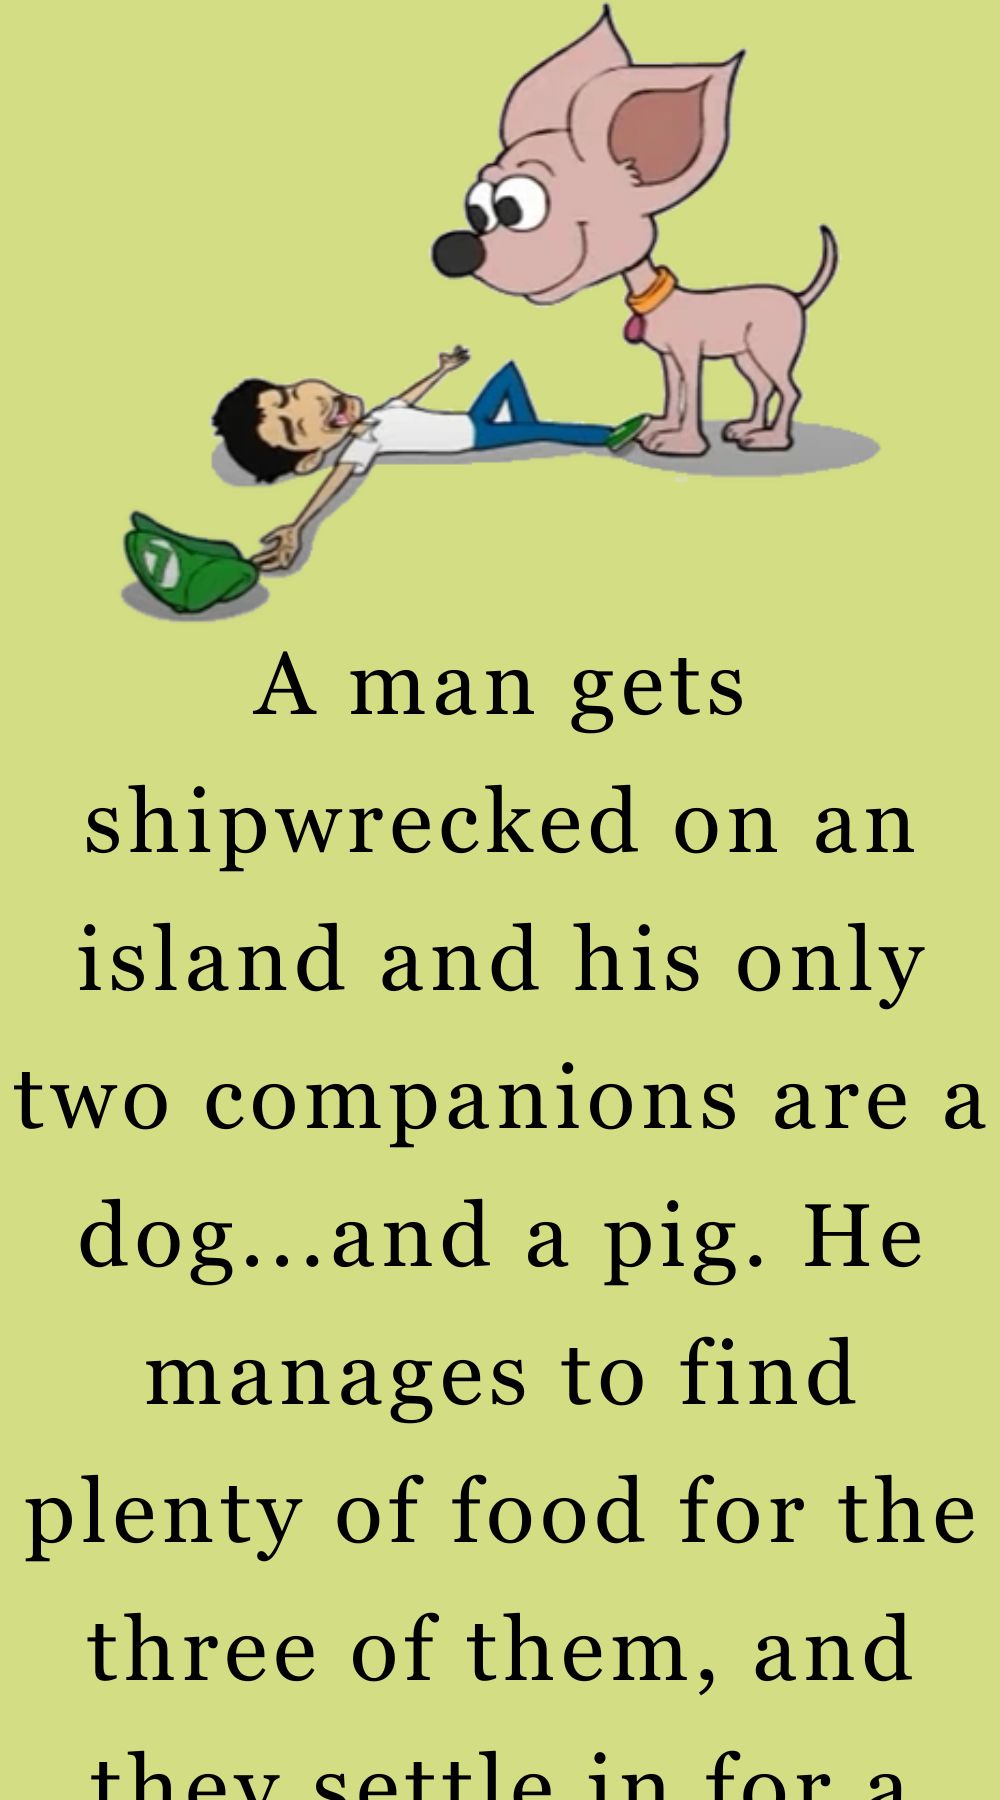 A man gets shipwrecked on an island